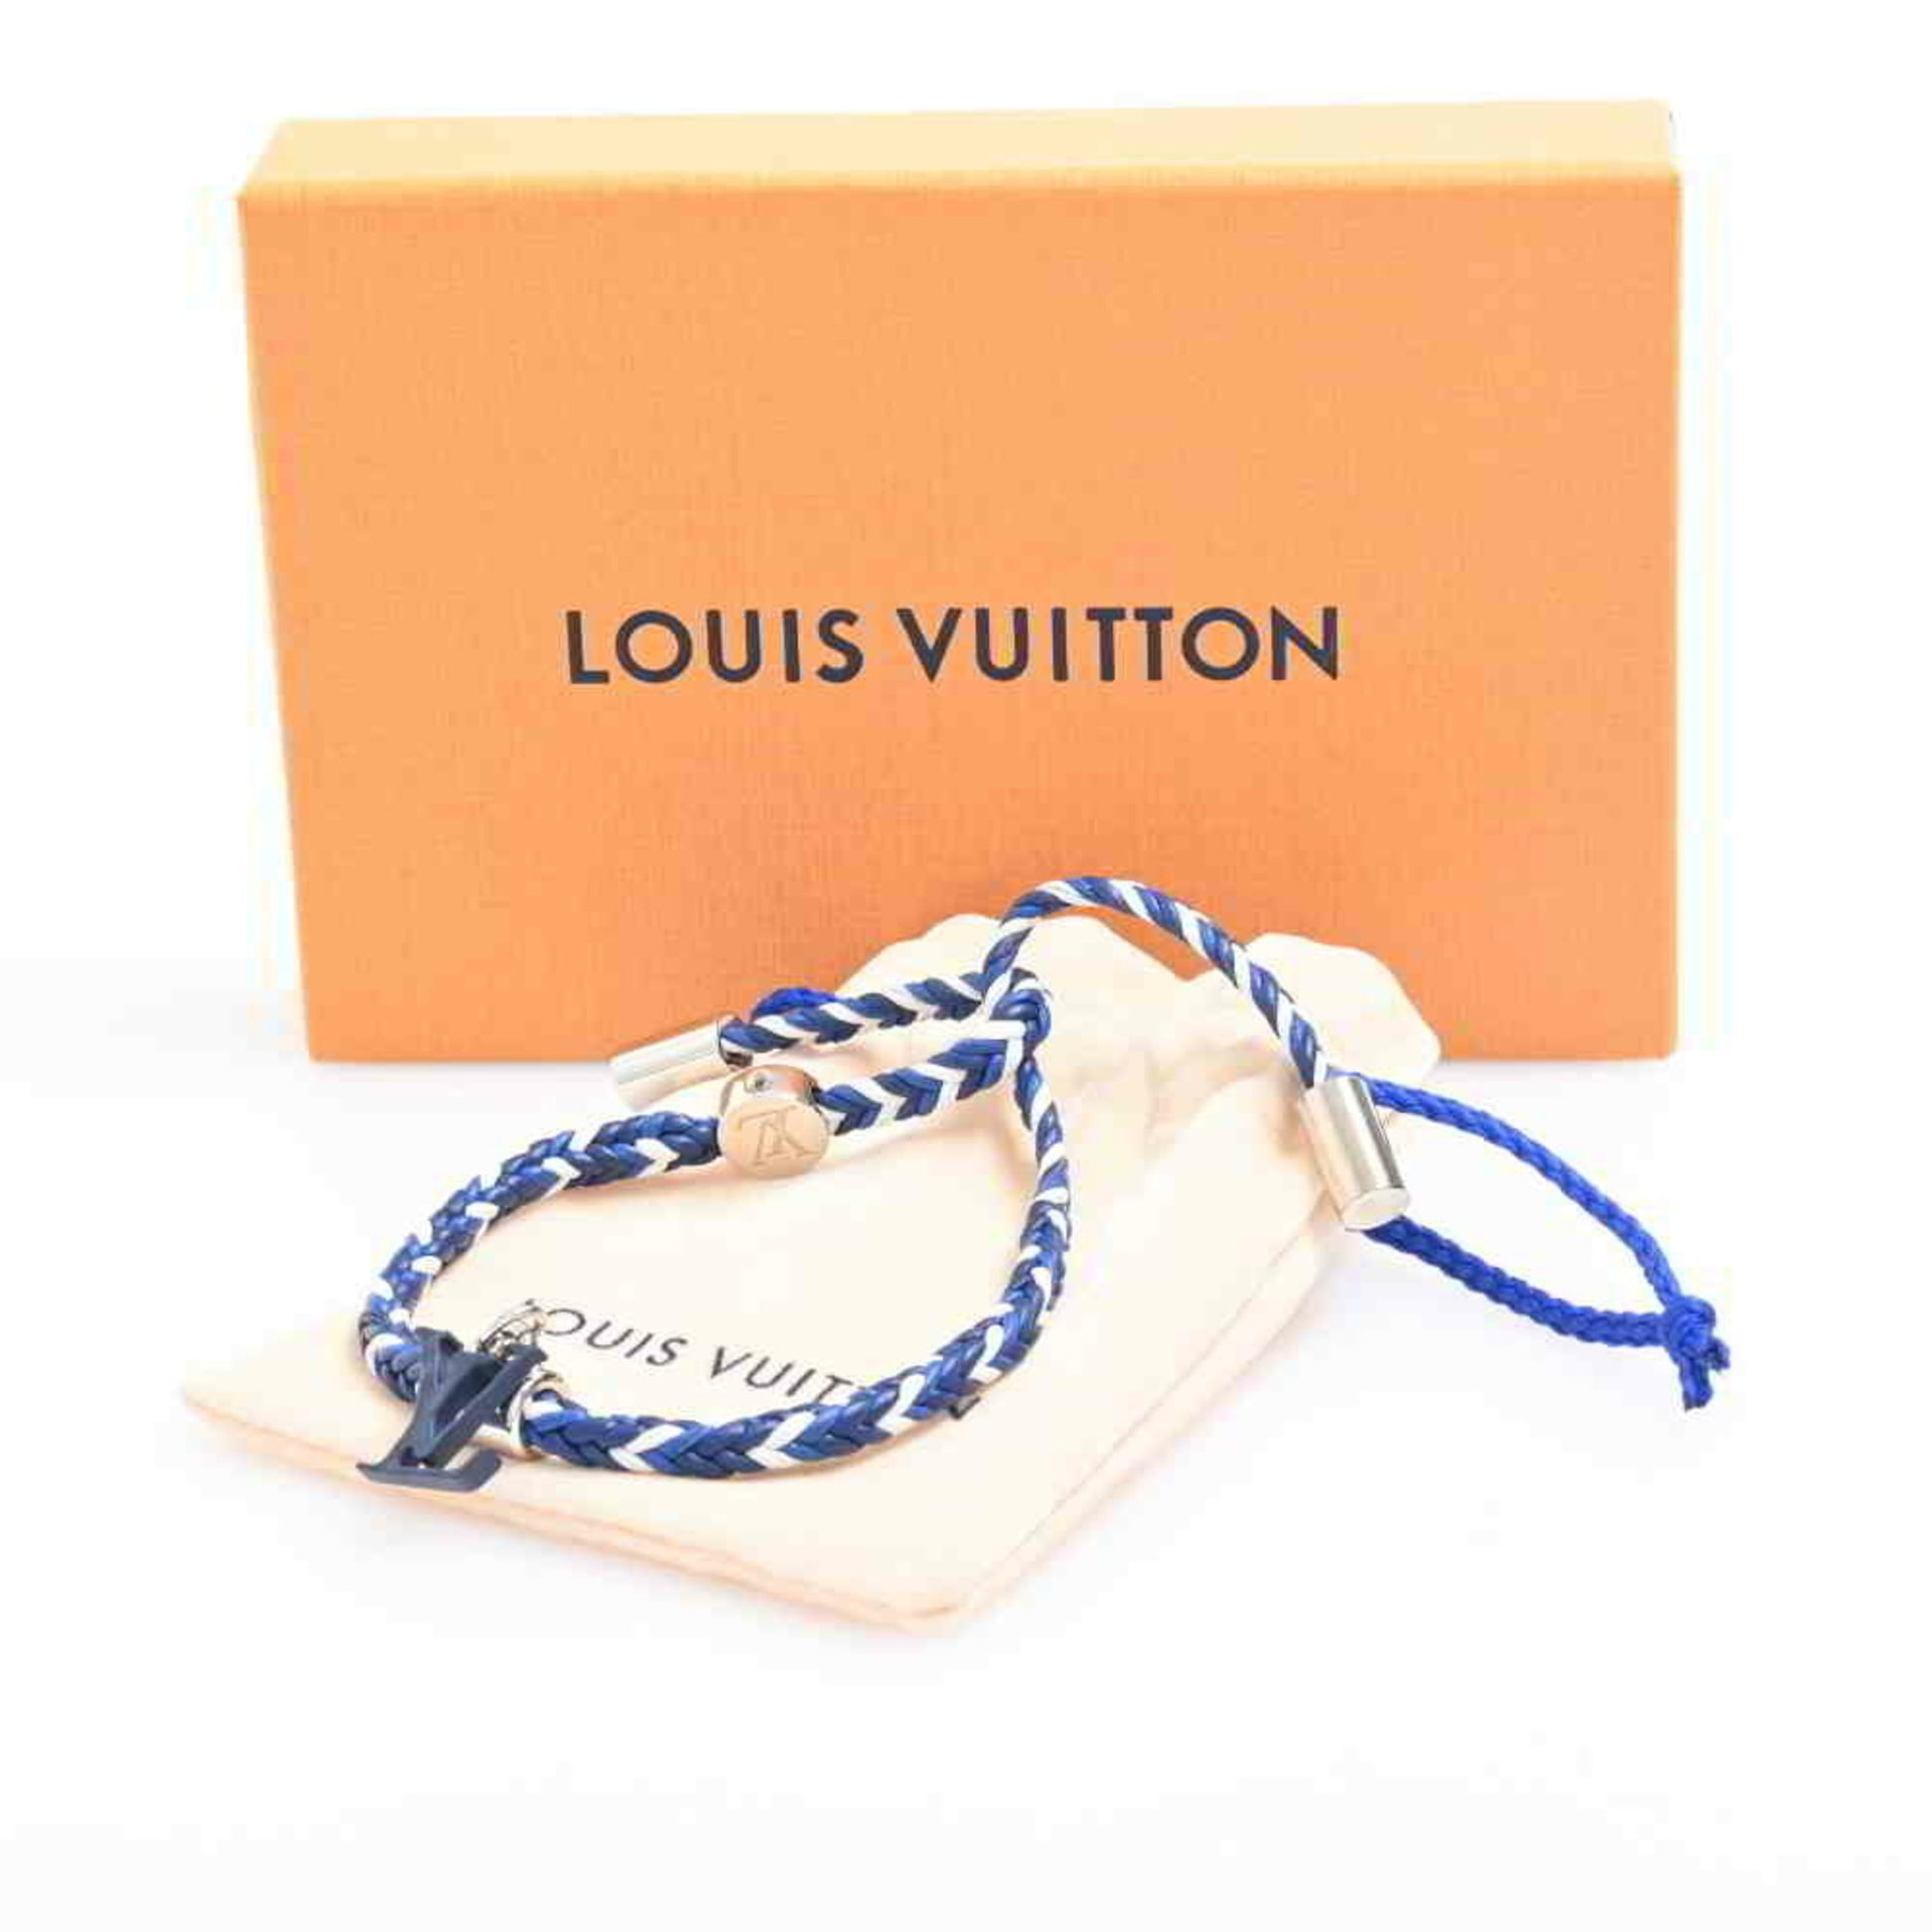 Adorable Louis Vuitton 'Party Bracelets' For Cruise 2020 – The